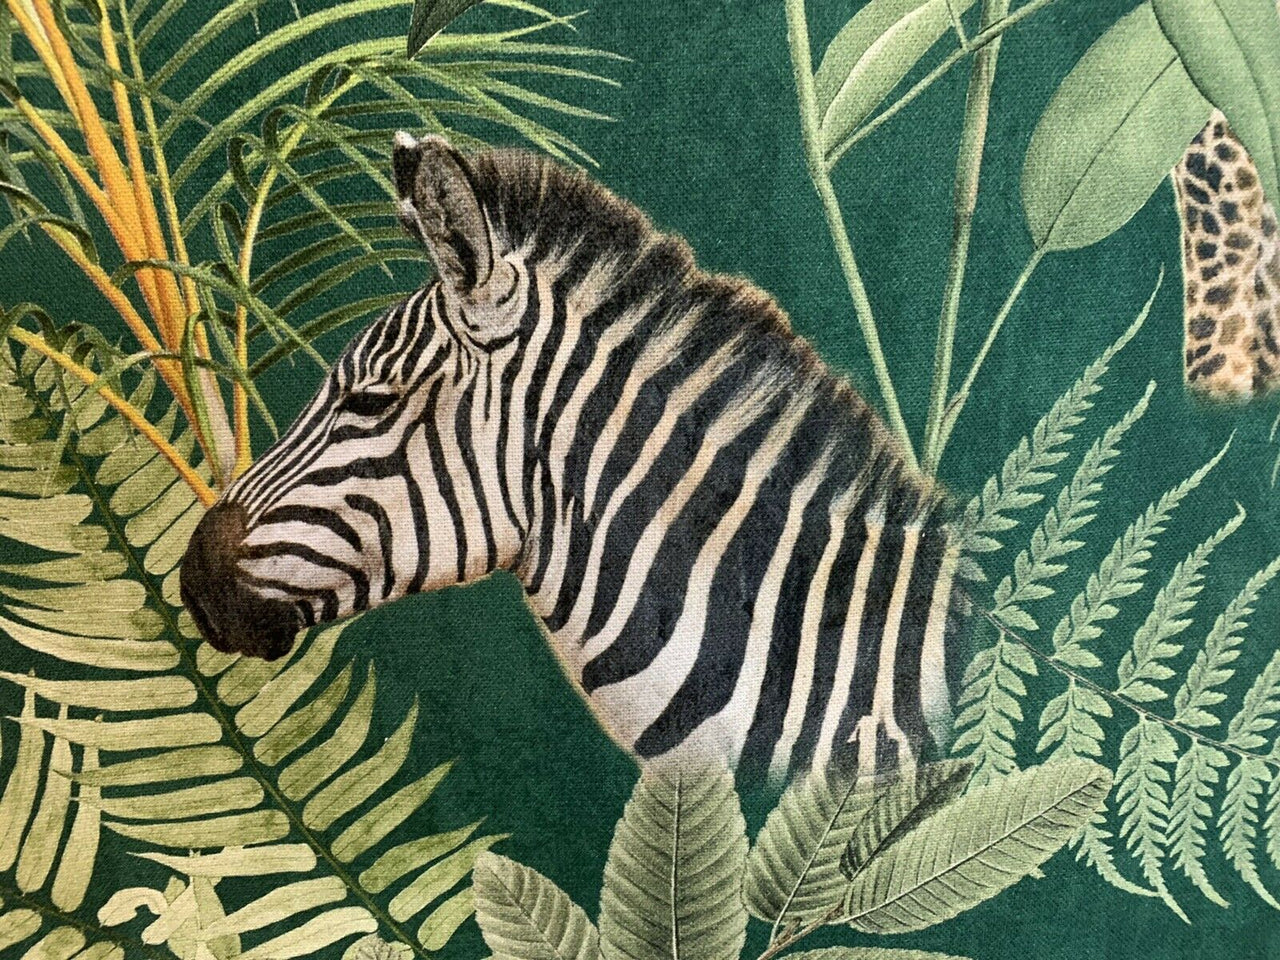 Safari Animals Fabric By Meter Green Cotton Sewing Material Tiger Elephant Zebra Giraffe Monkey Animal Print Textile